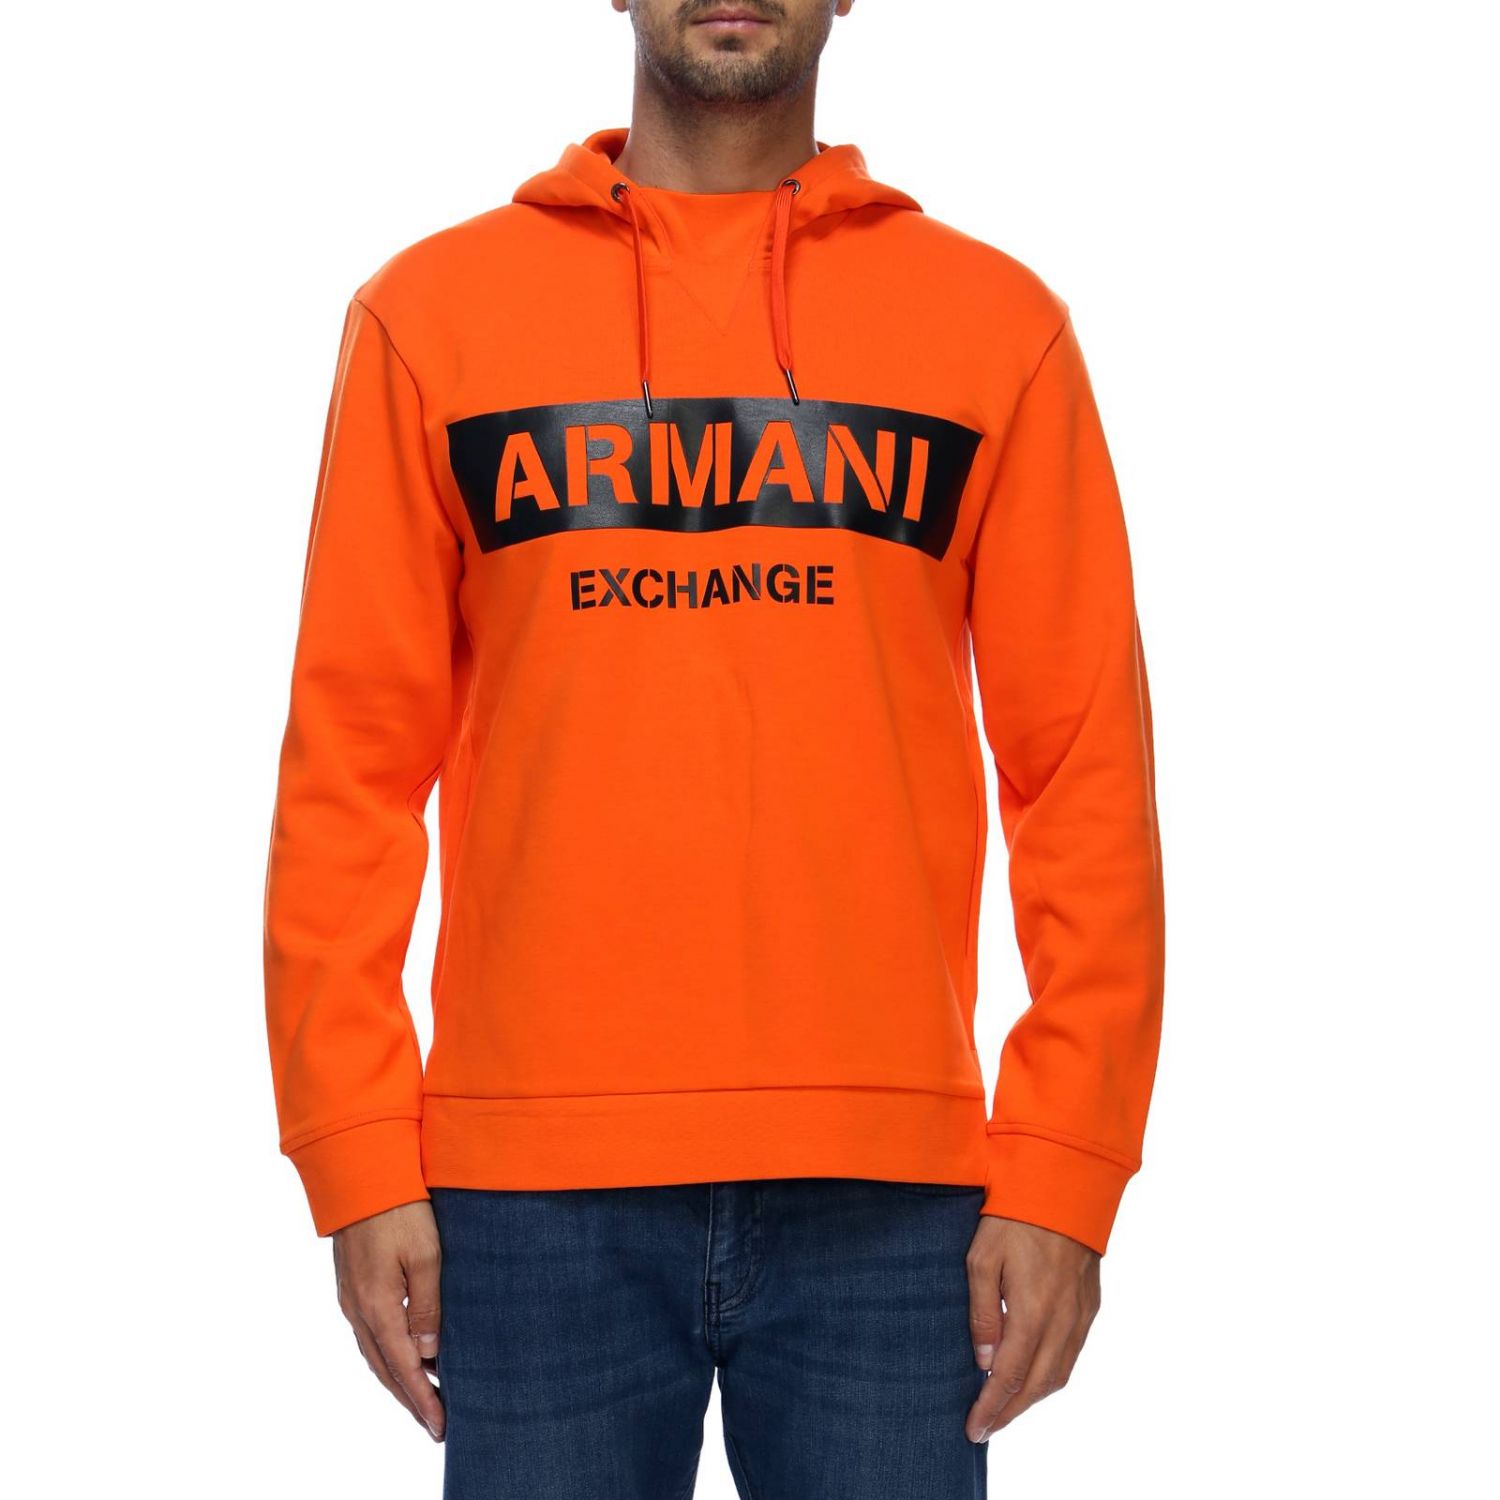 armani exchange hoodie men's